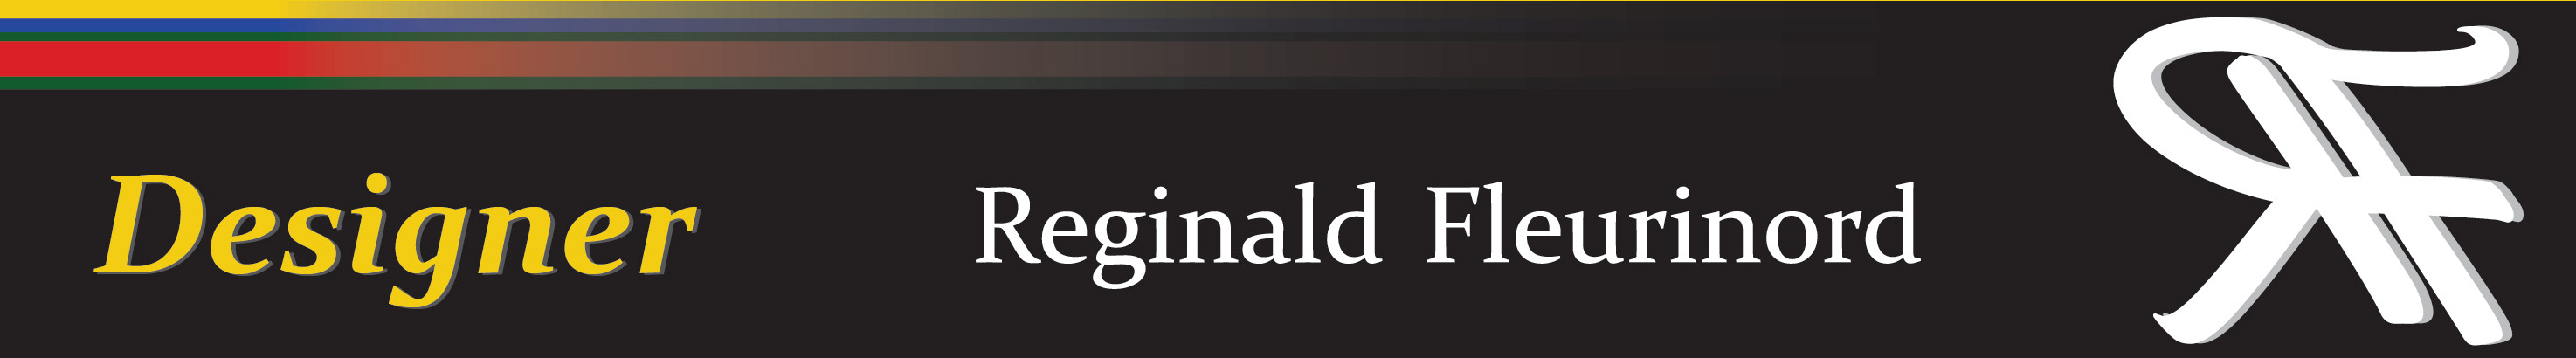 Reginald Fleurinord's profile banner